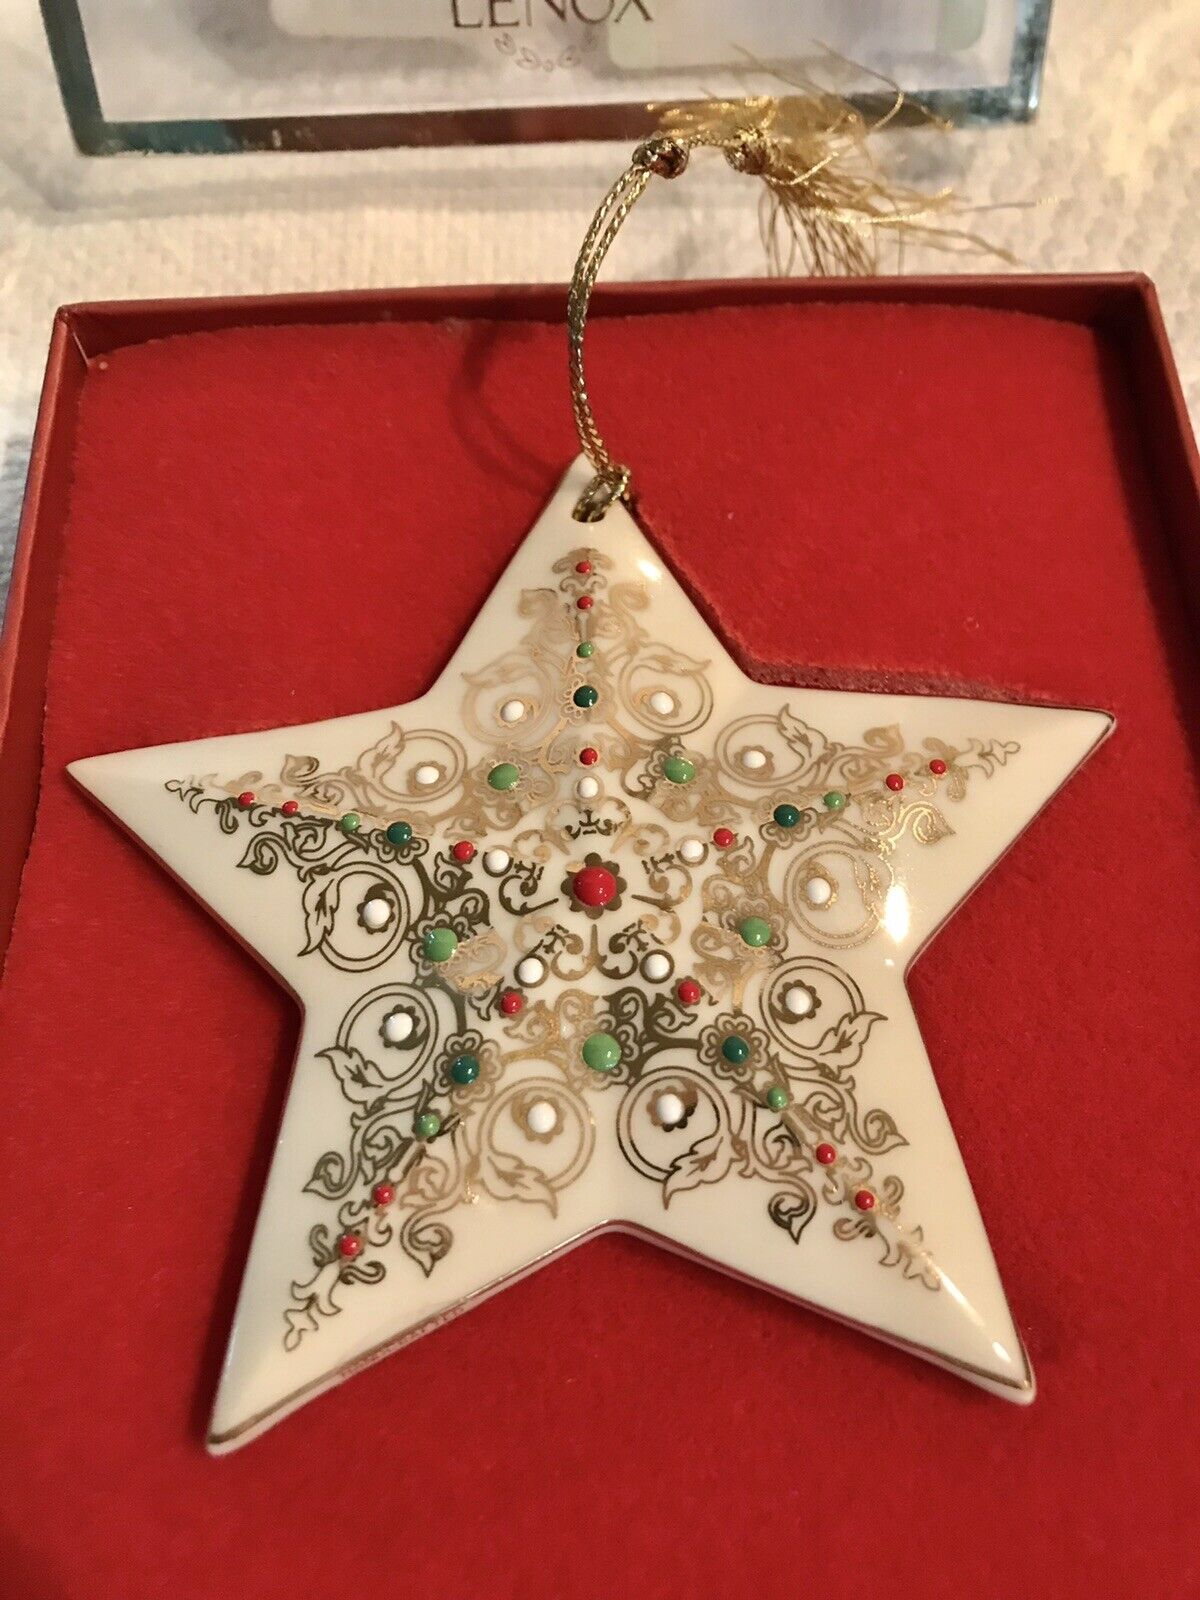 Lenox China Jewel Star Ornament, 1999 EUC 4”D $34